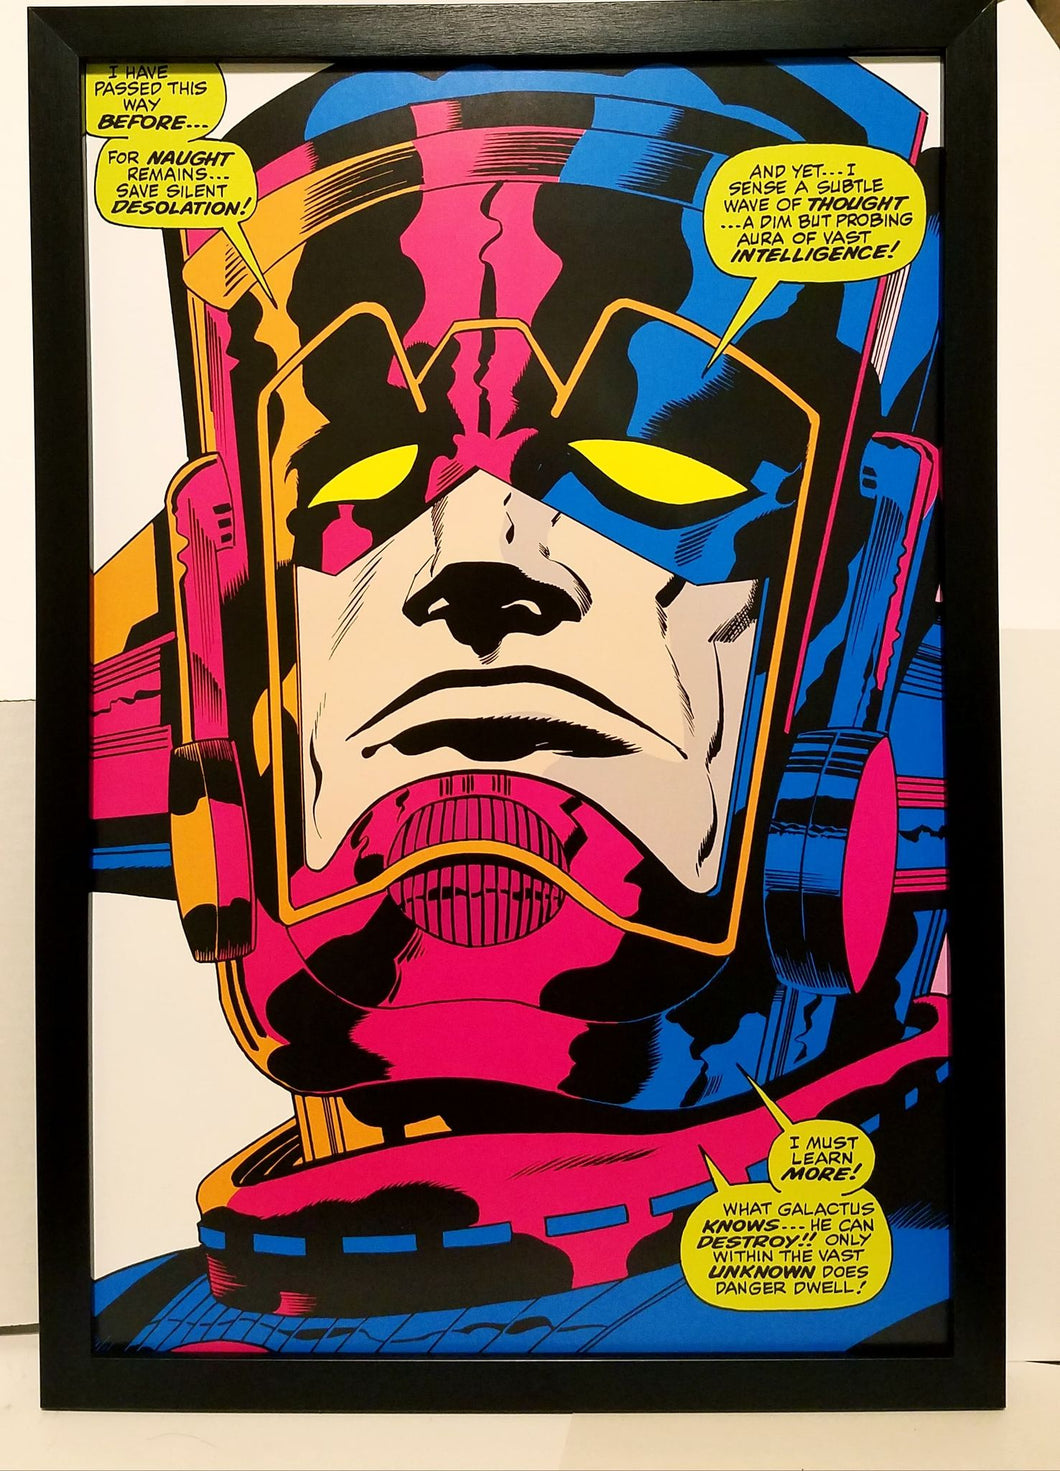 Galactus Thor #160 by Jack Kirby 12x18 FRAMED Marvel Comics Vintage Art Print Poster